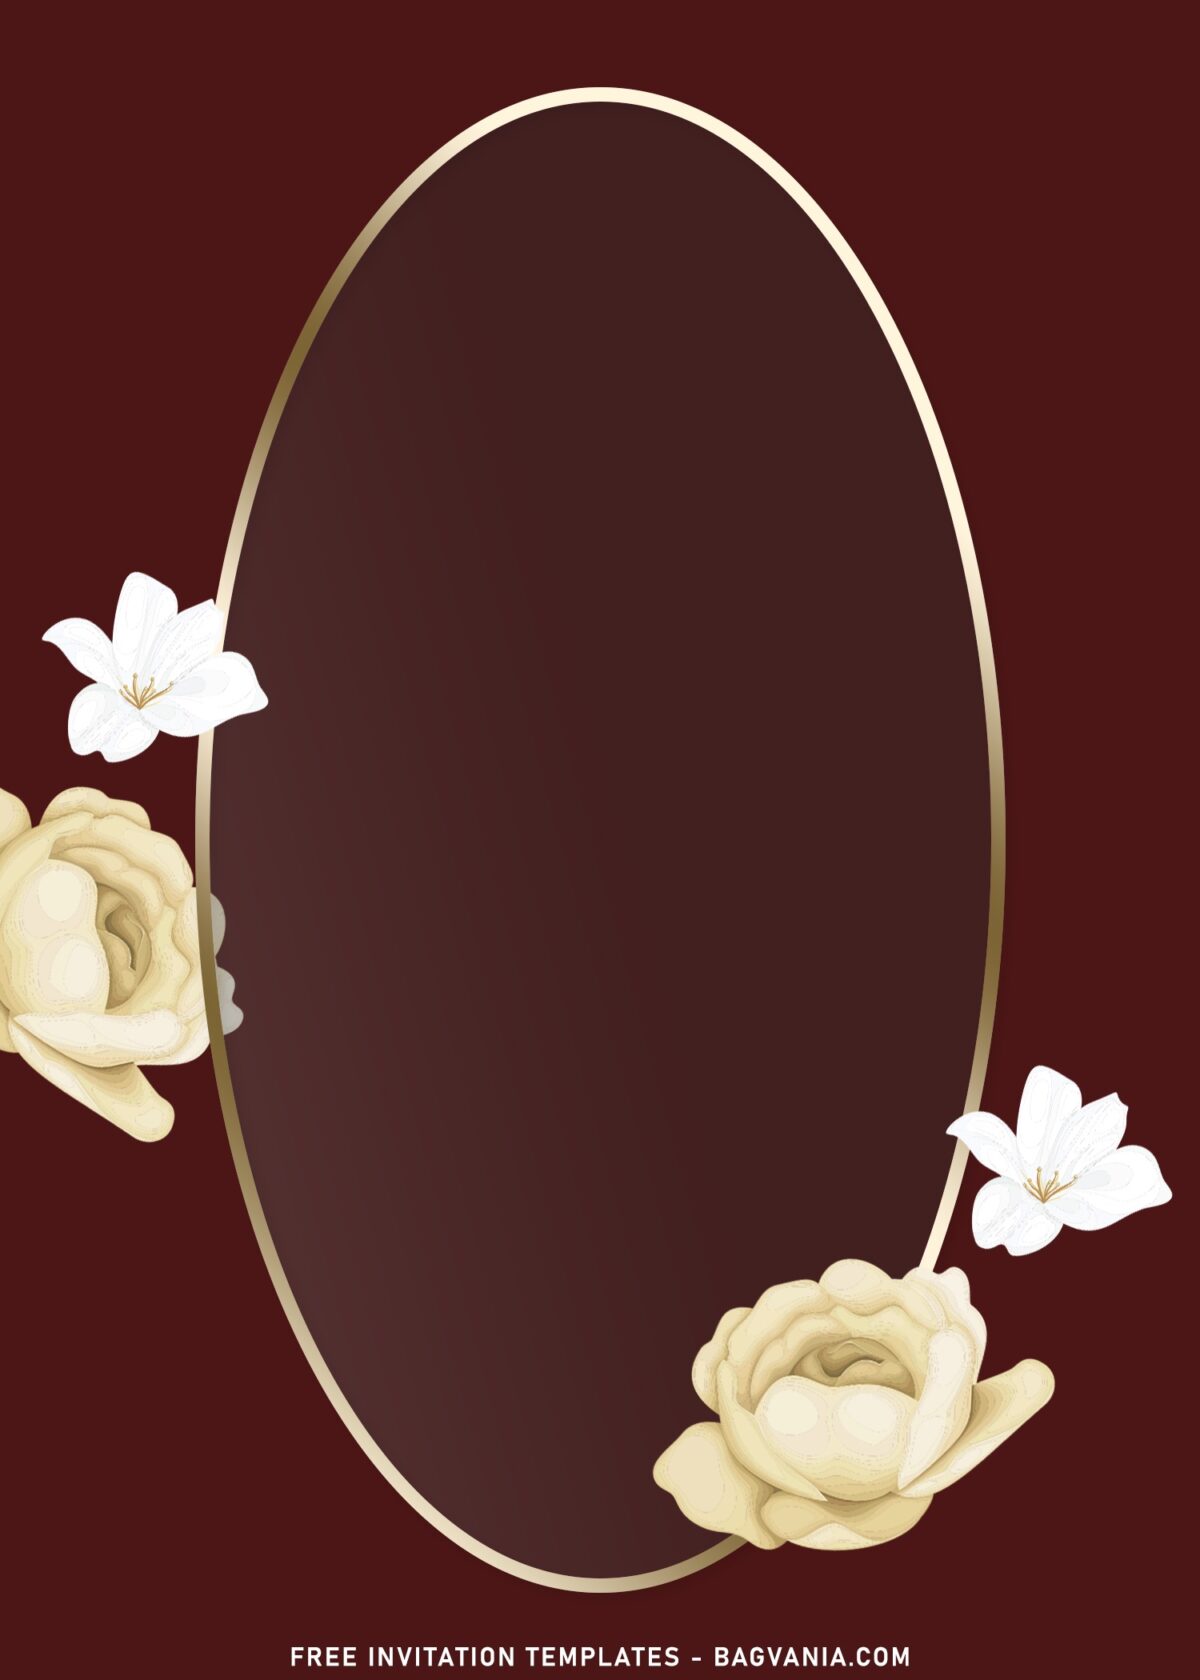 7+ Lavish Rose Birthday Invitation Templates with enchanting white magnolia